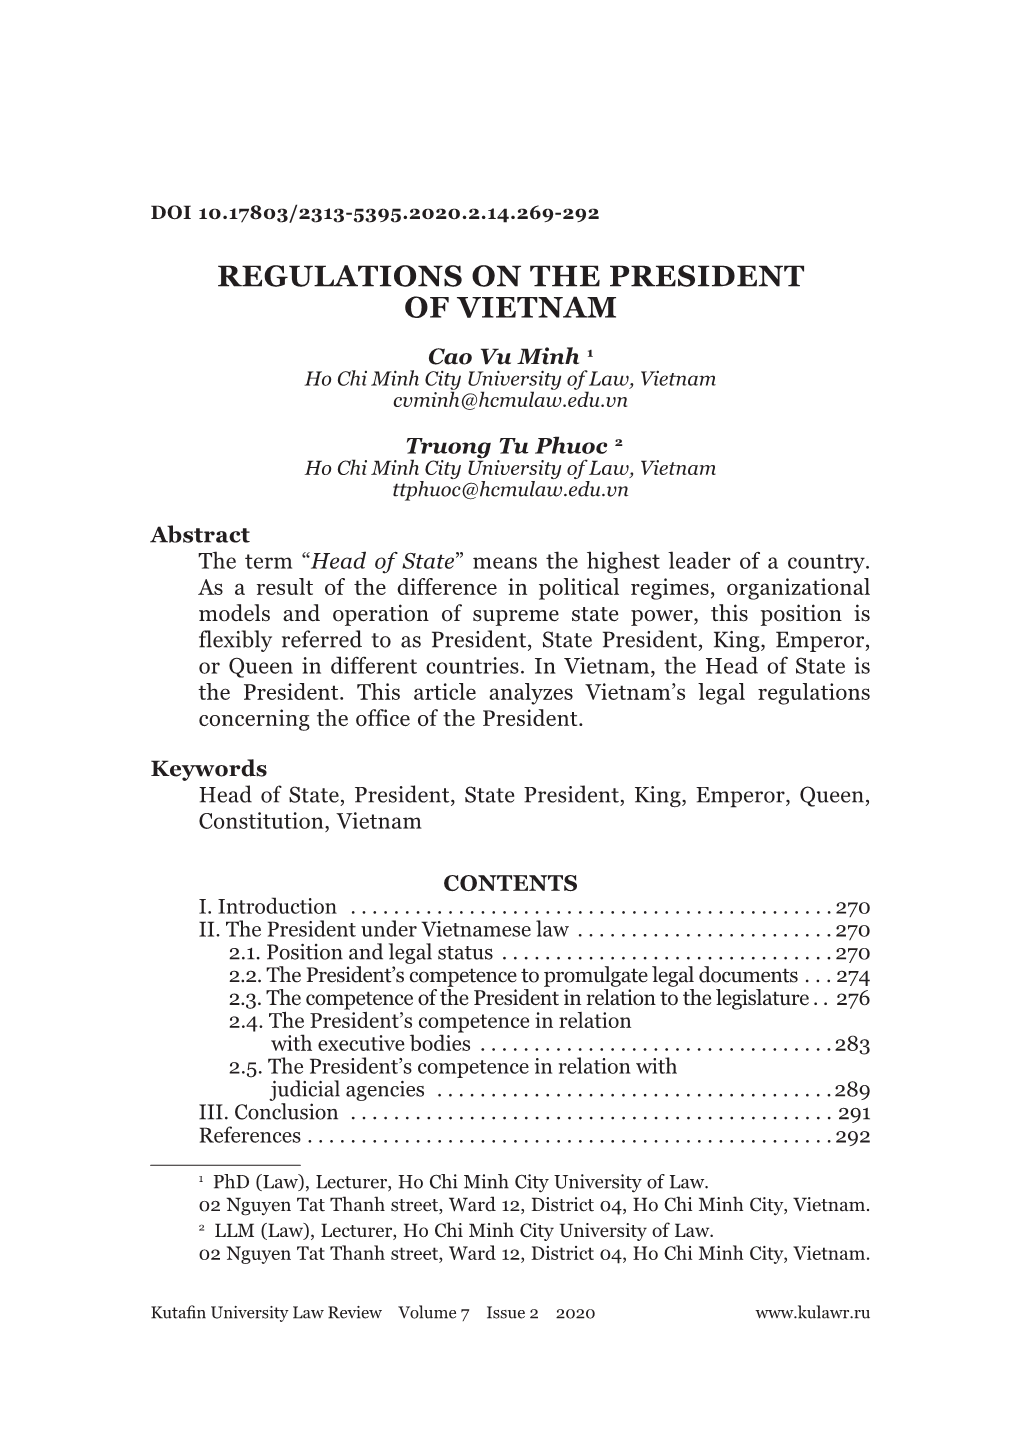 Regulations on the President of Vietnam